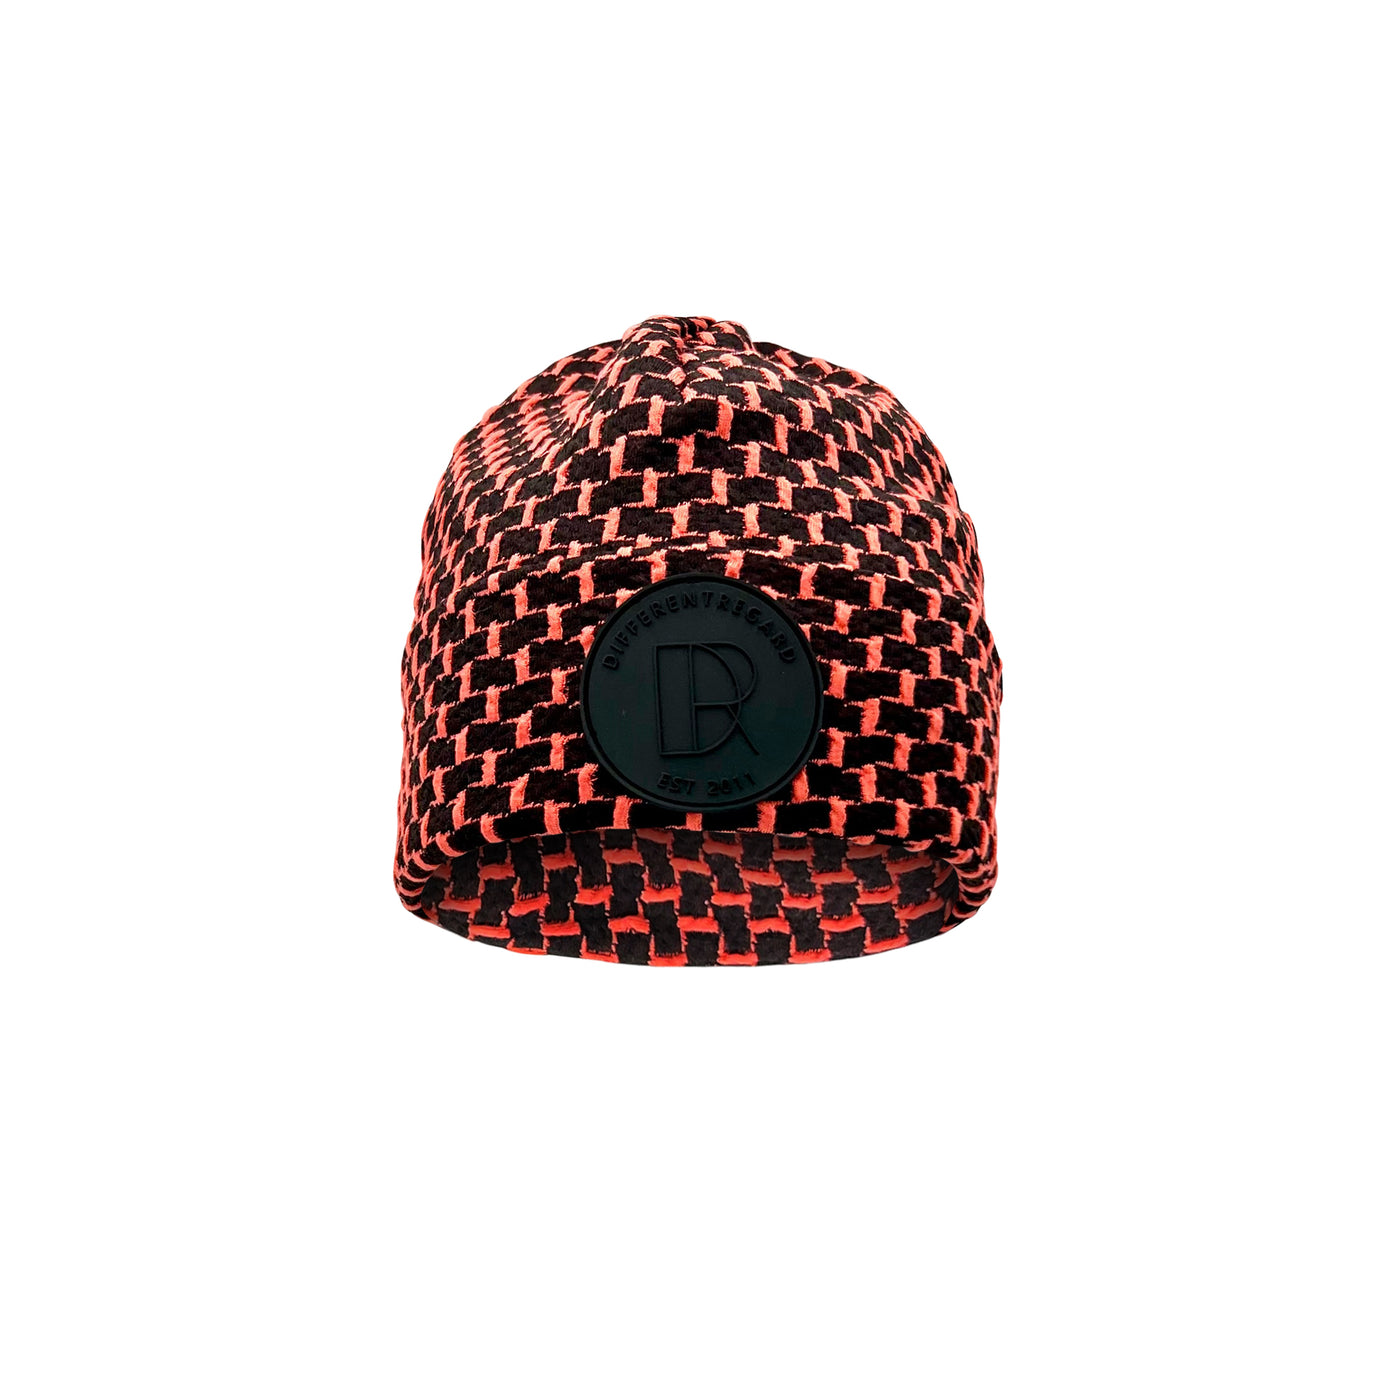 Coral & Black Textured Knit Hat/Beanie